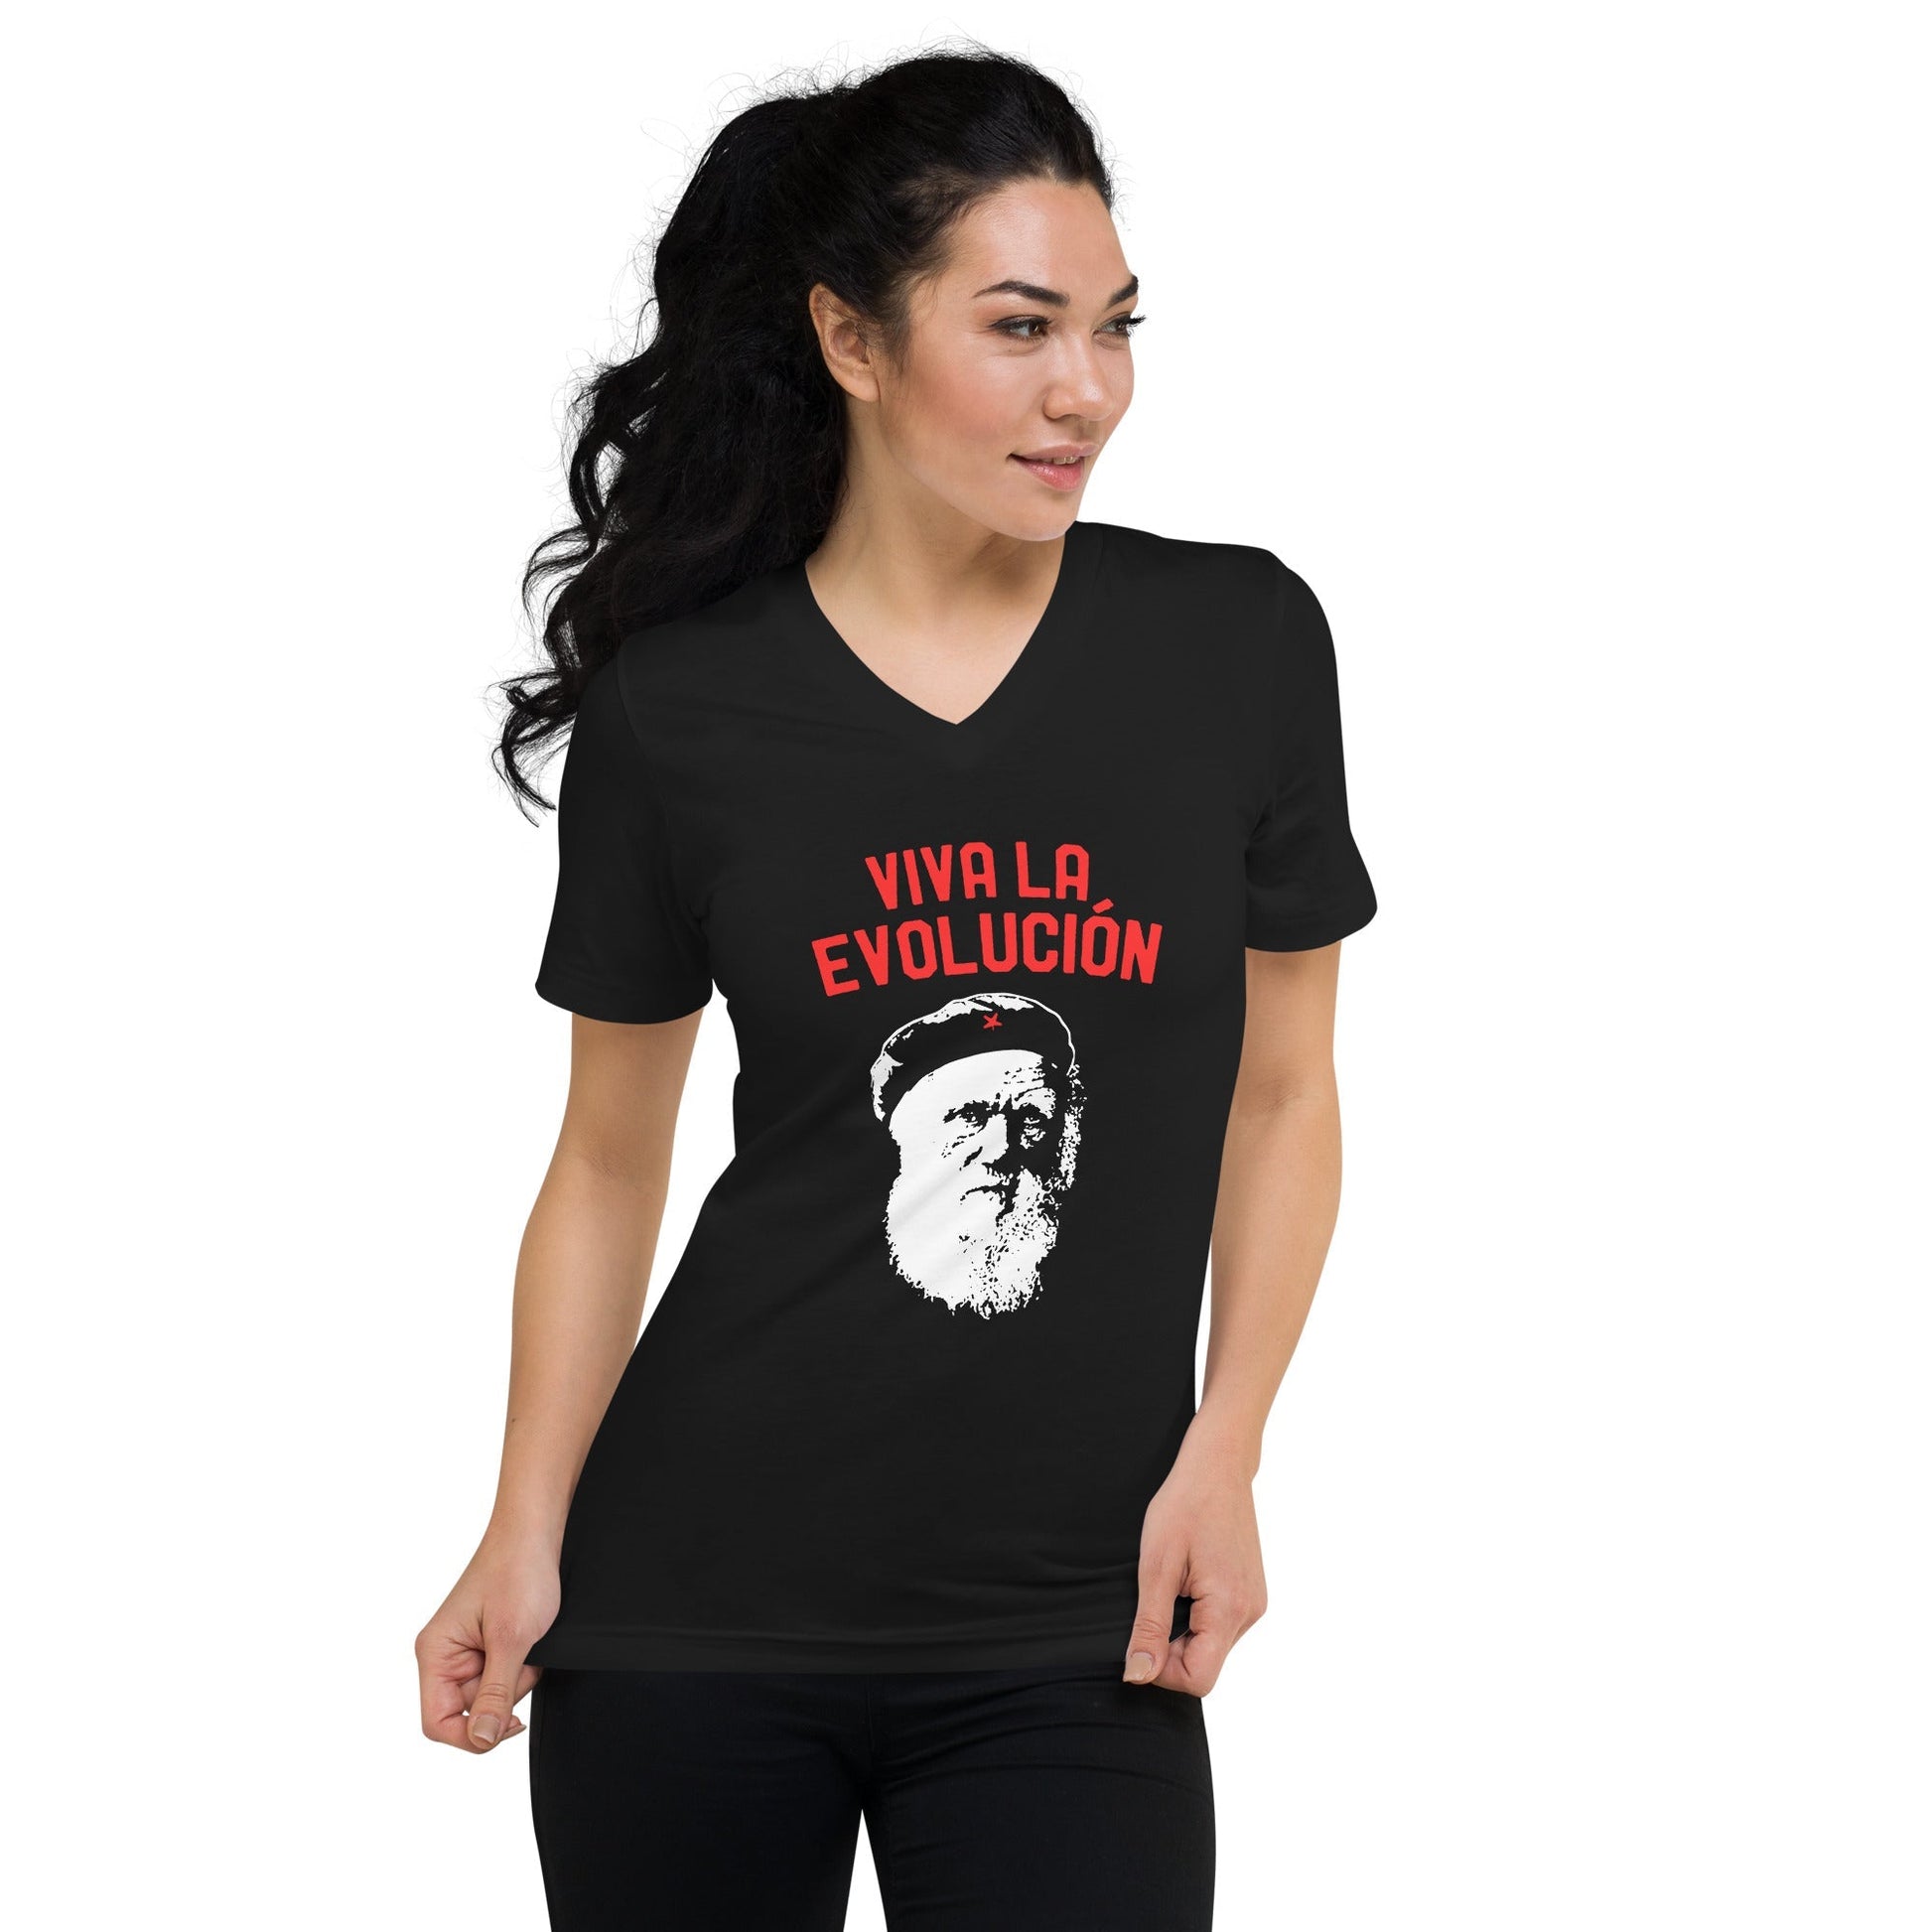 Darwin - Viva la Evolucion - V-Neck T-Shirt